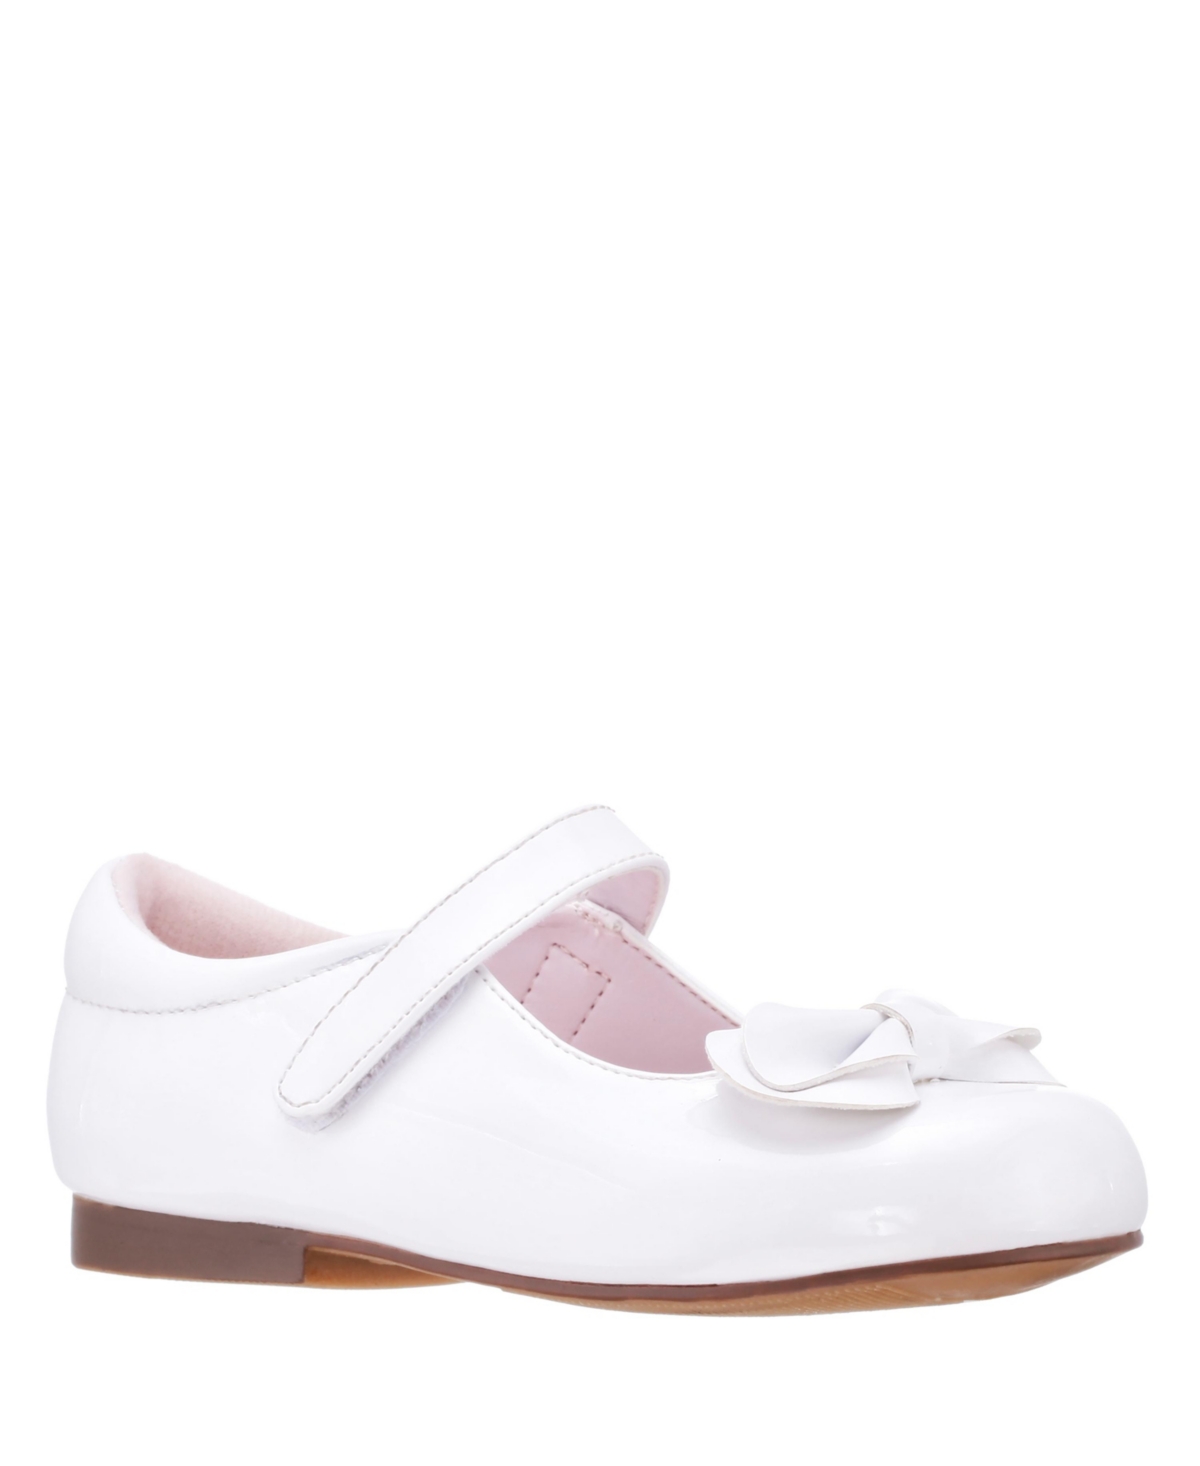 Nina Toddler Girls Krista Mary Jane Dress Shoes In White Patent